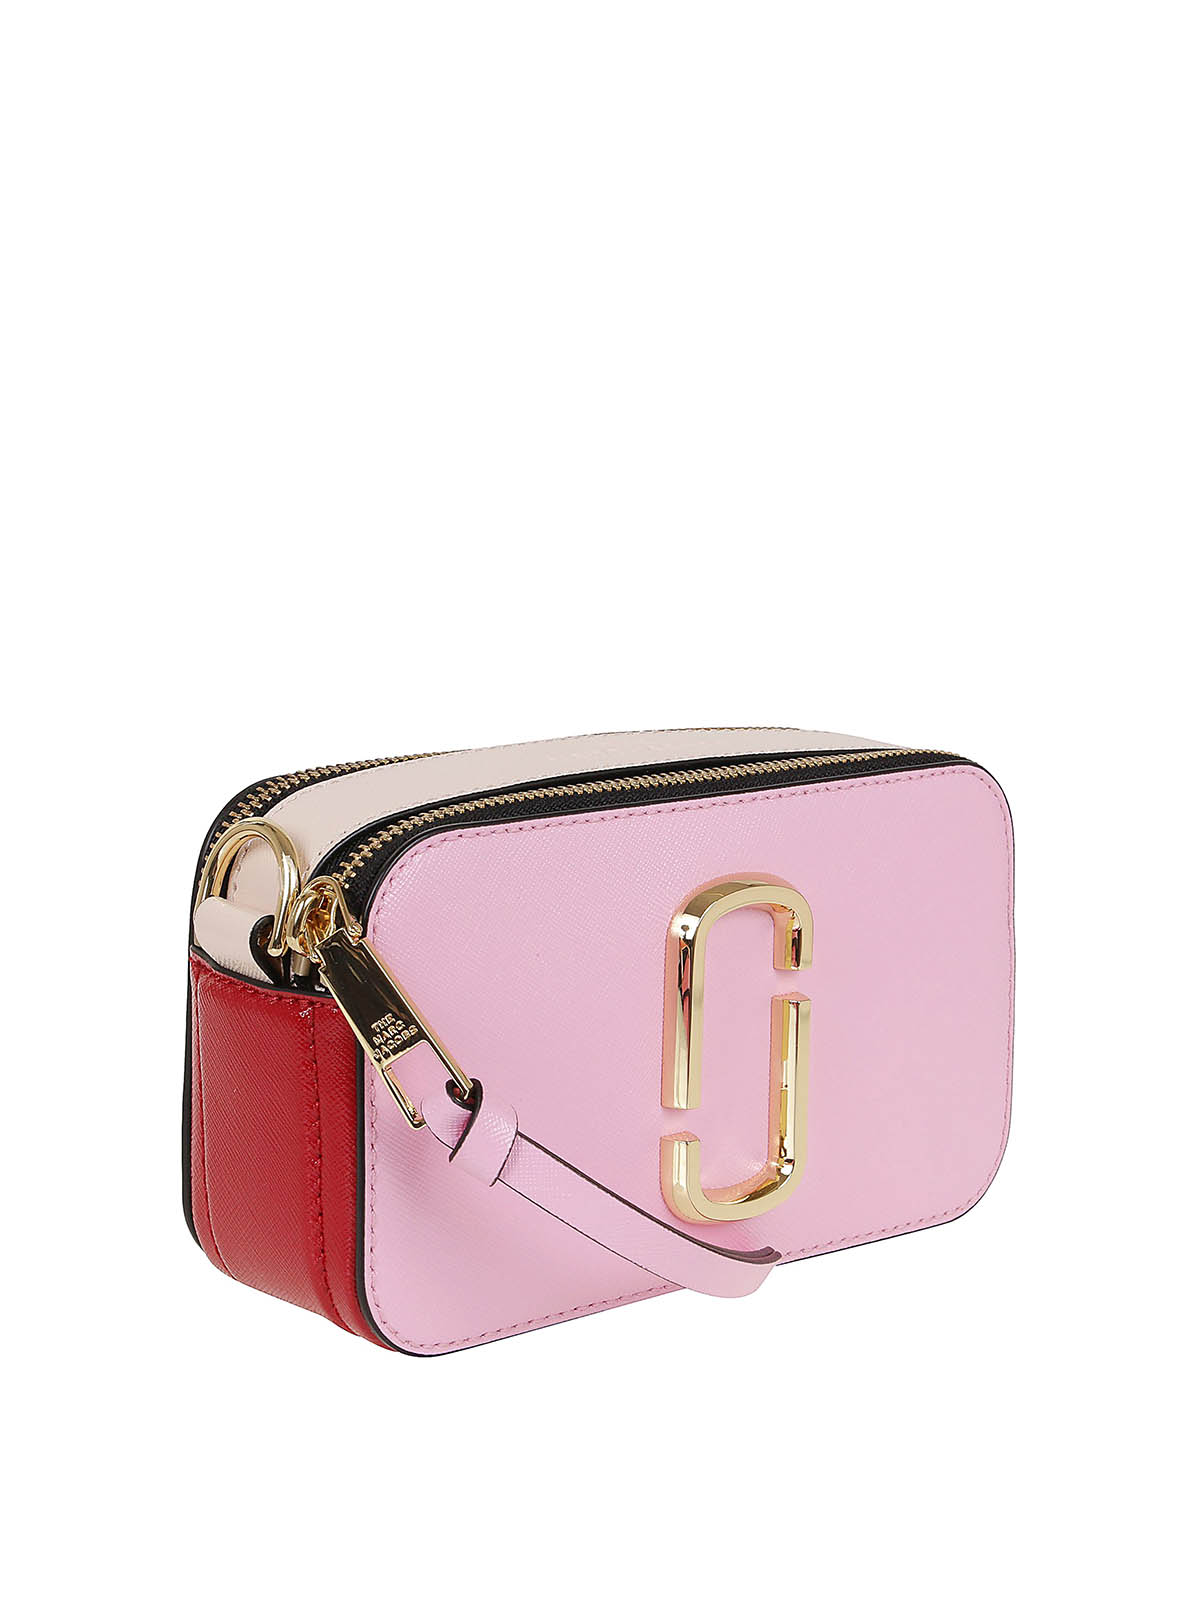 Marc Jacobs Crossbody snapshot bag pink print